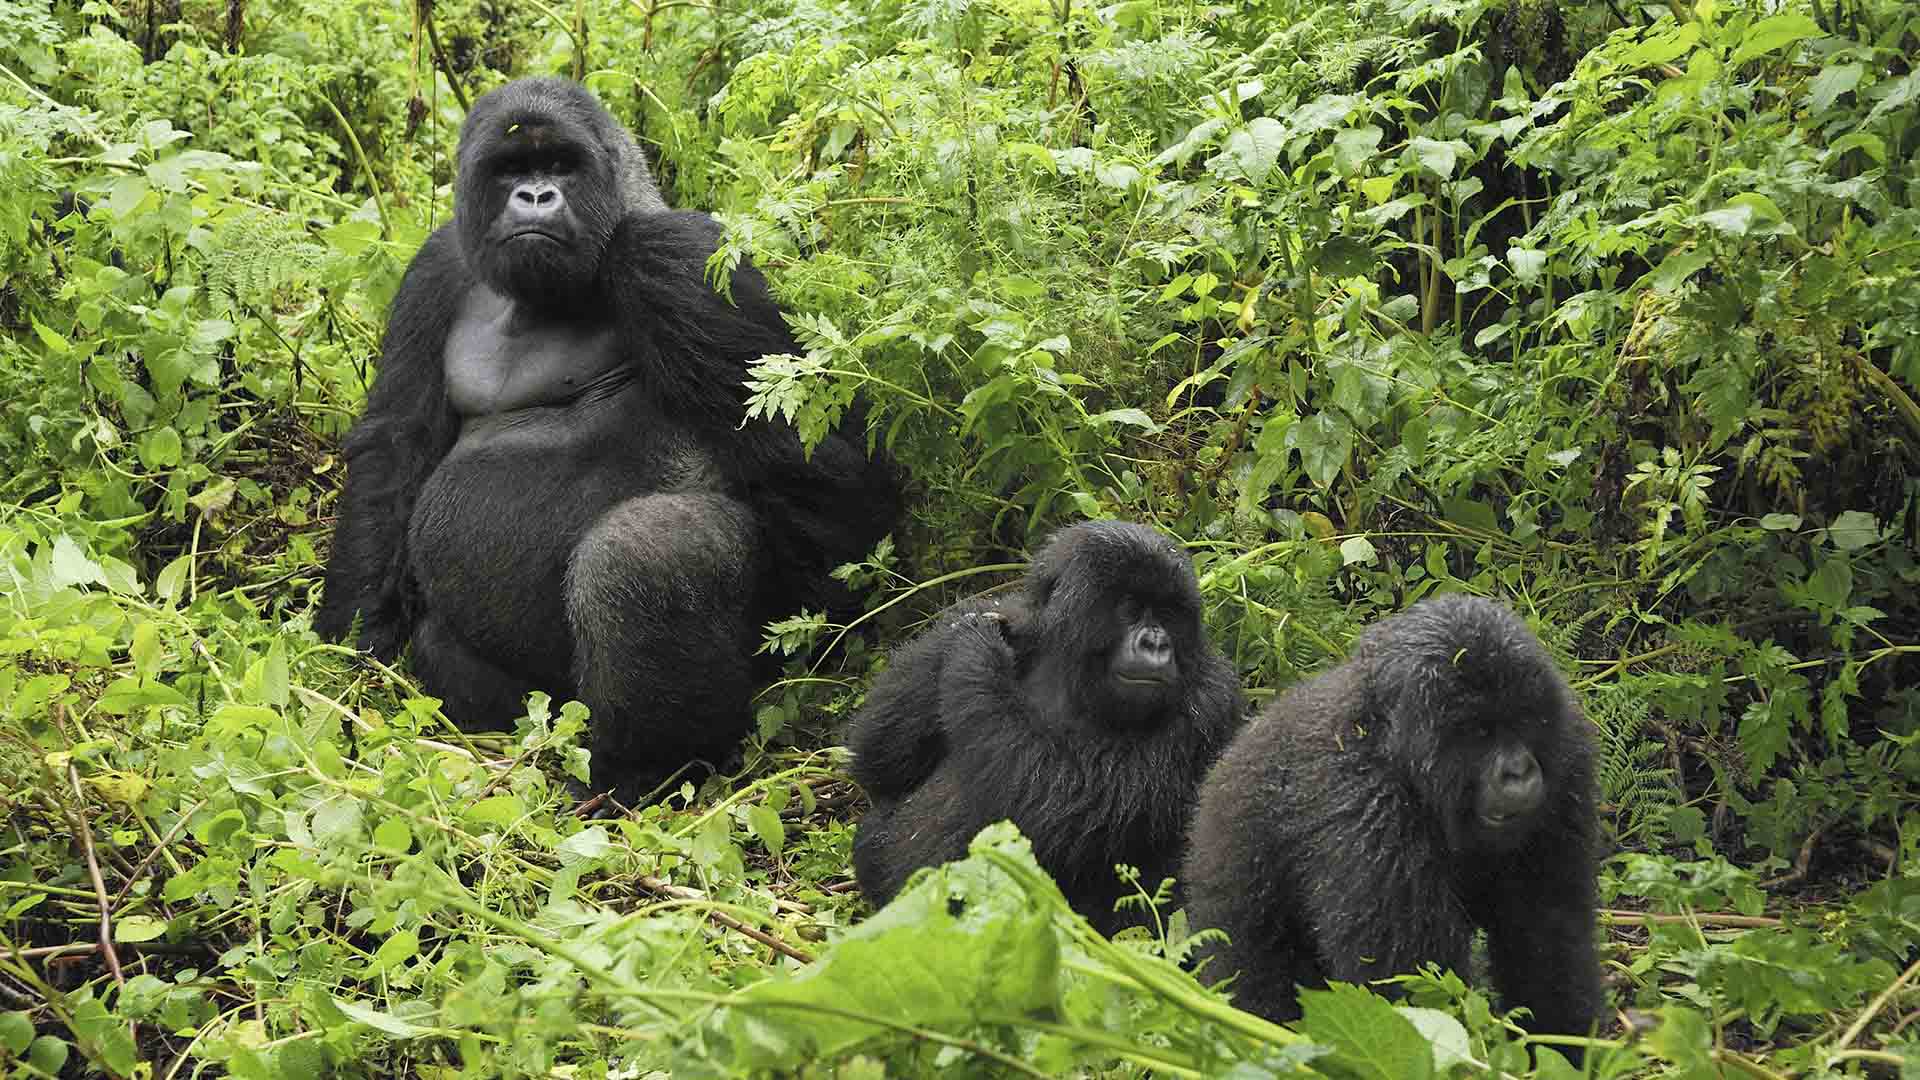 Are Mountain gorillas friendly to people?